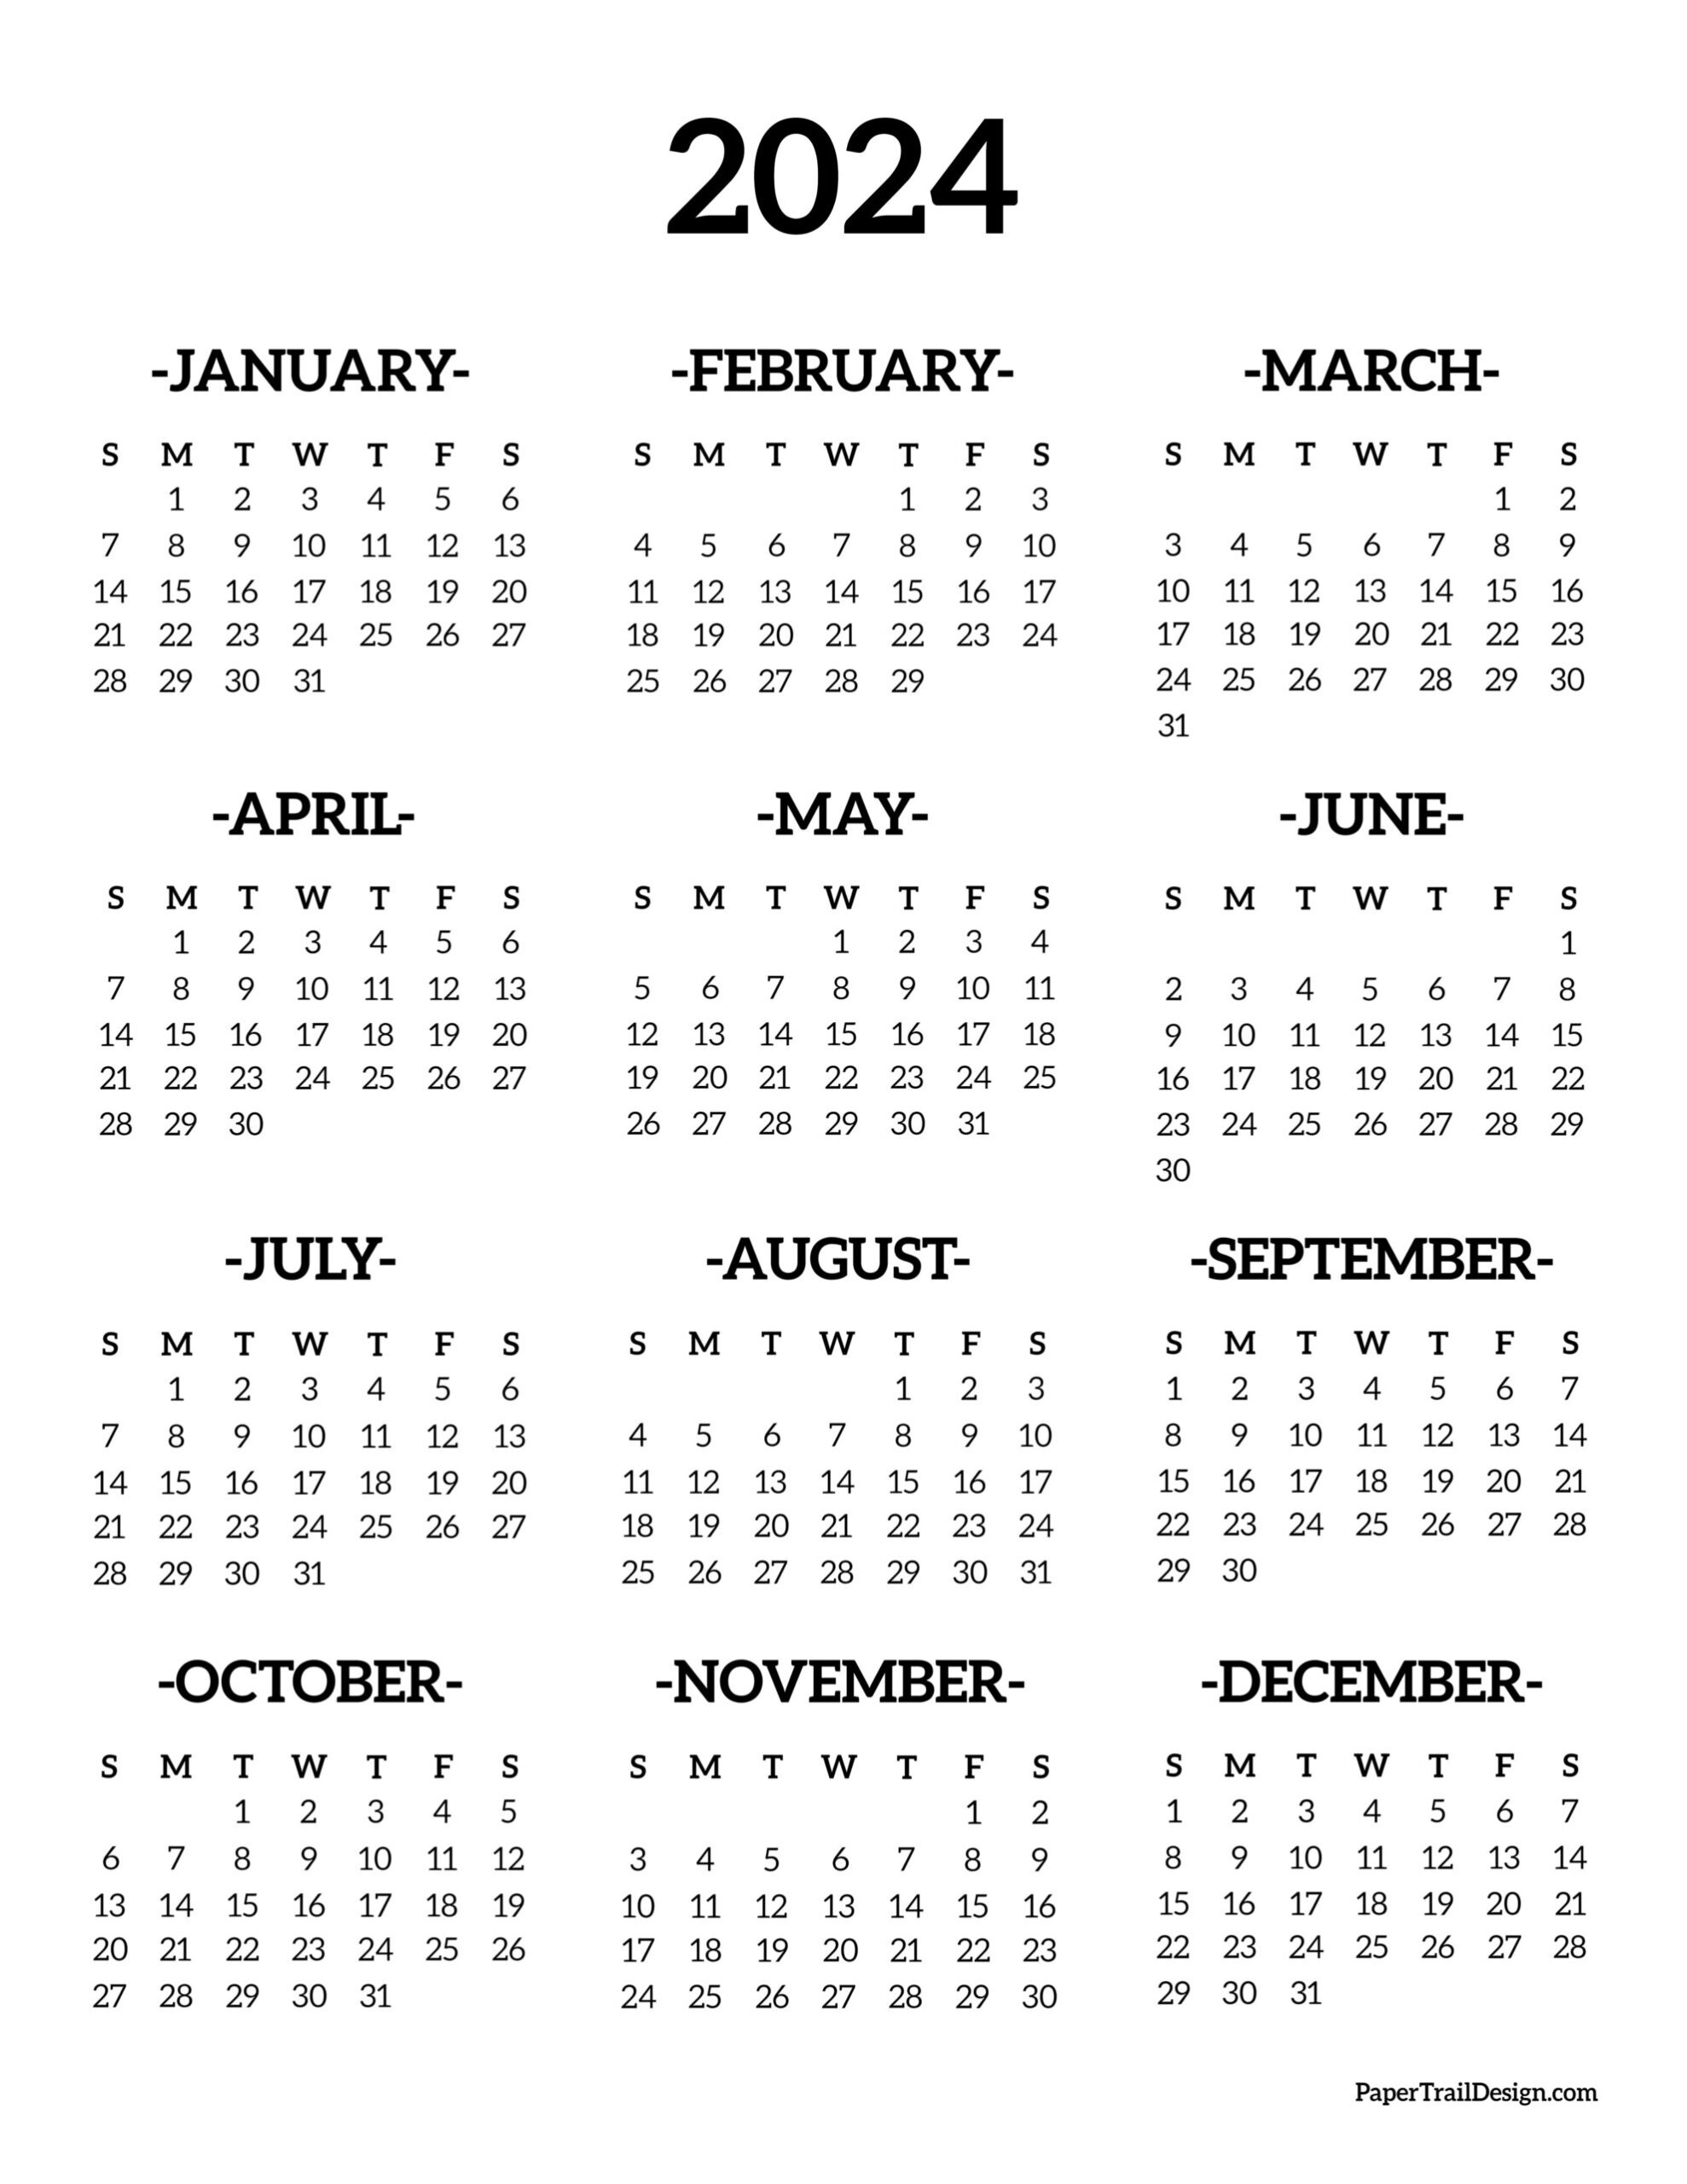 Calendar 2024 Printable One Page - Paper Trail Design | 2024 Year Printable Calendar